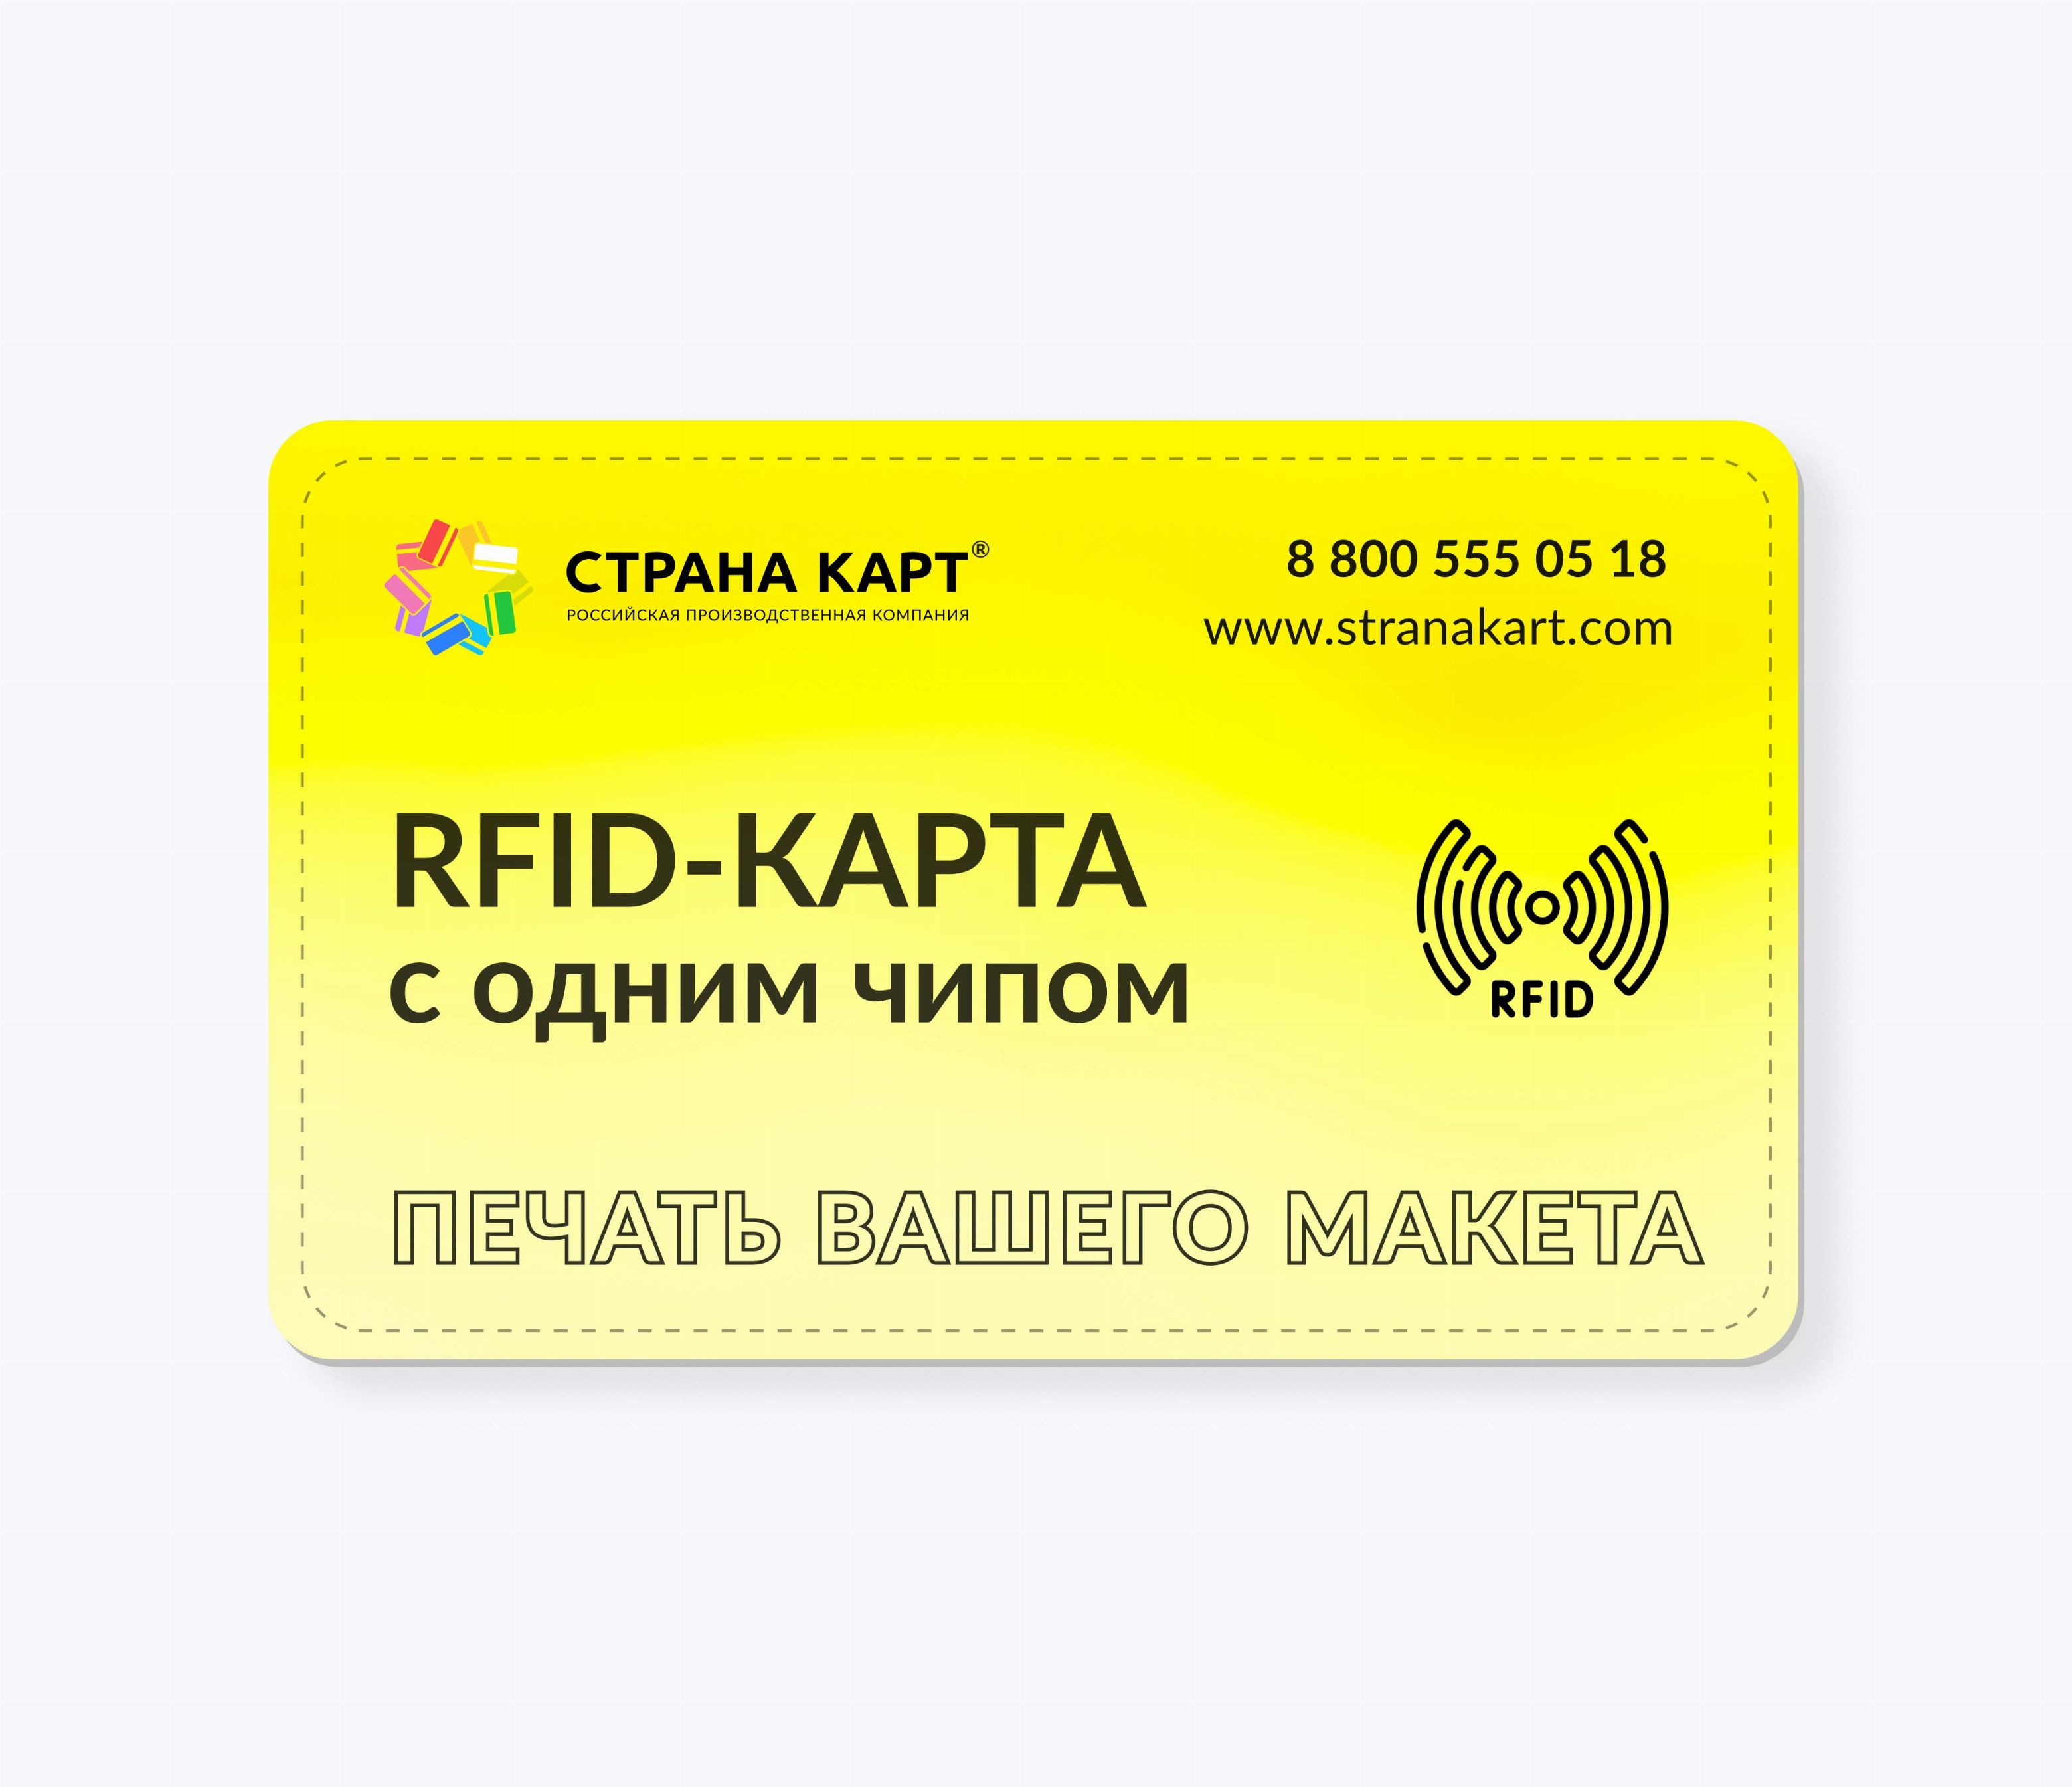 RFID-карты с чипом NXP MIFARE Plus S 2k 7 byte UID печать вашего макета RFID-карты с чипом NXP MIFARE Plus S 2k 7 byte UID